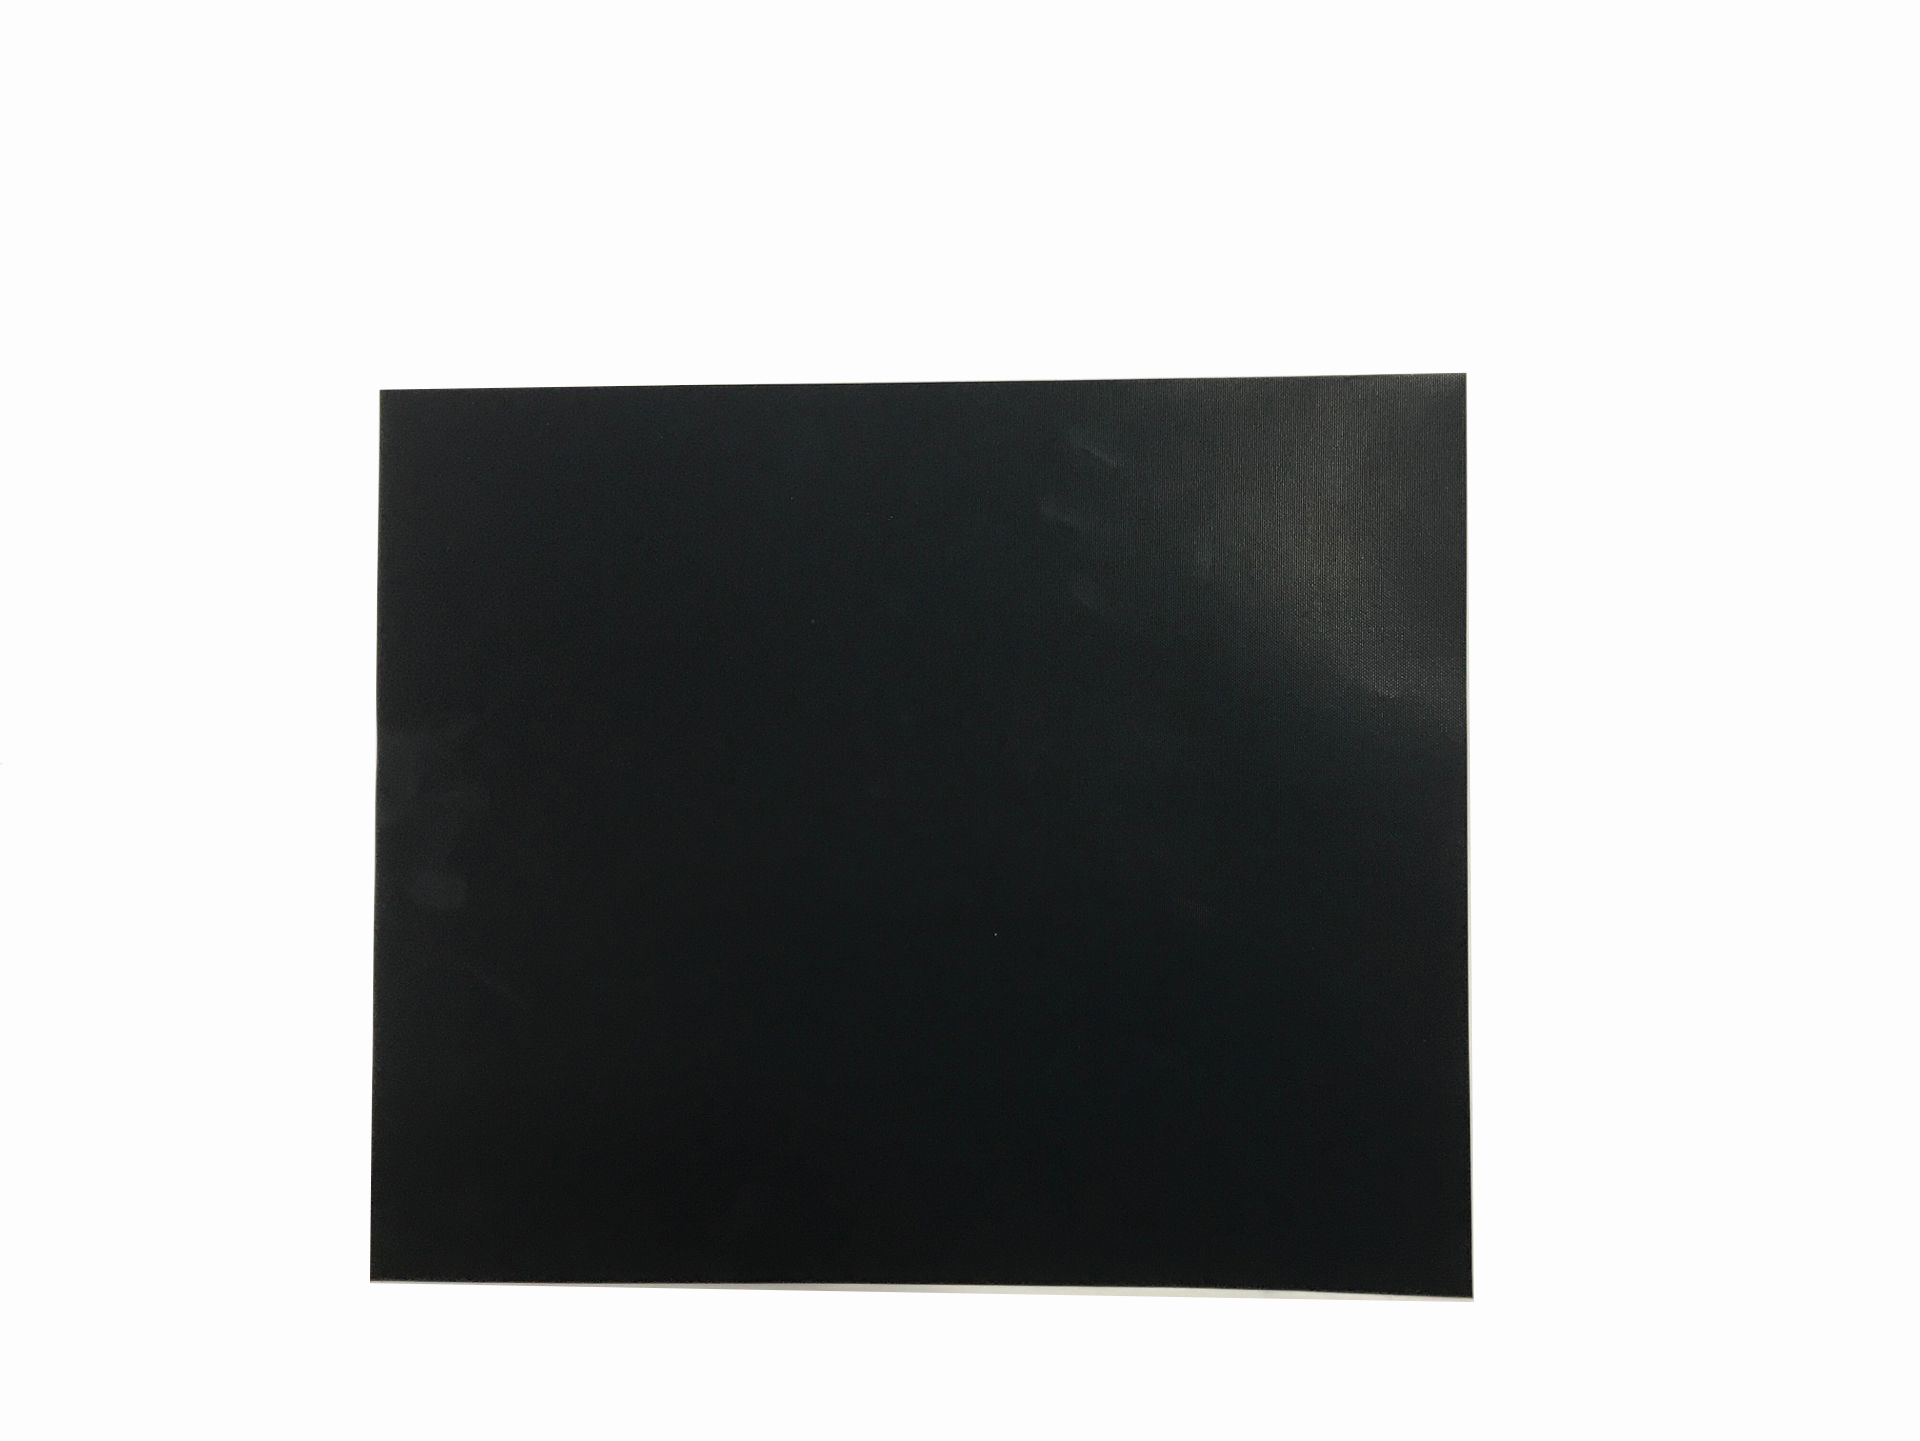 Grillmatte 6-er-Pack schwarz Antihaftbeschichtung bis 260°C